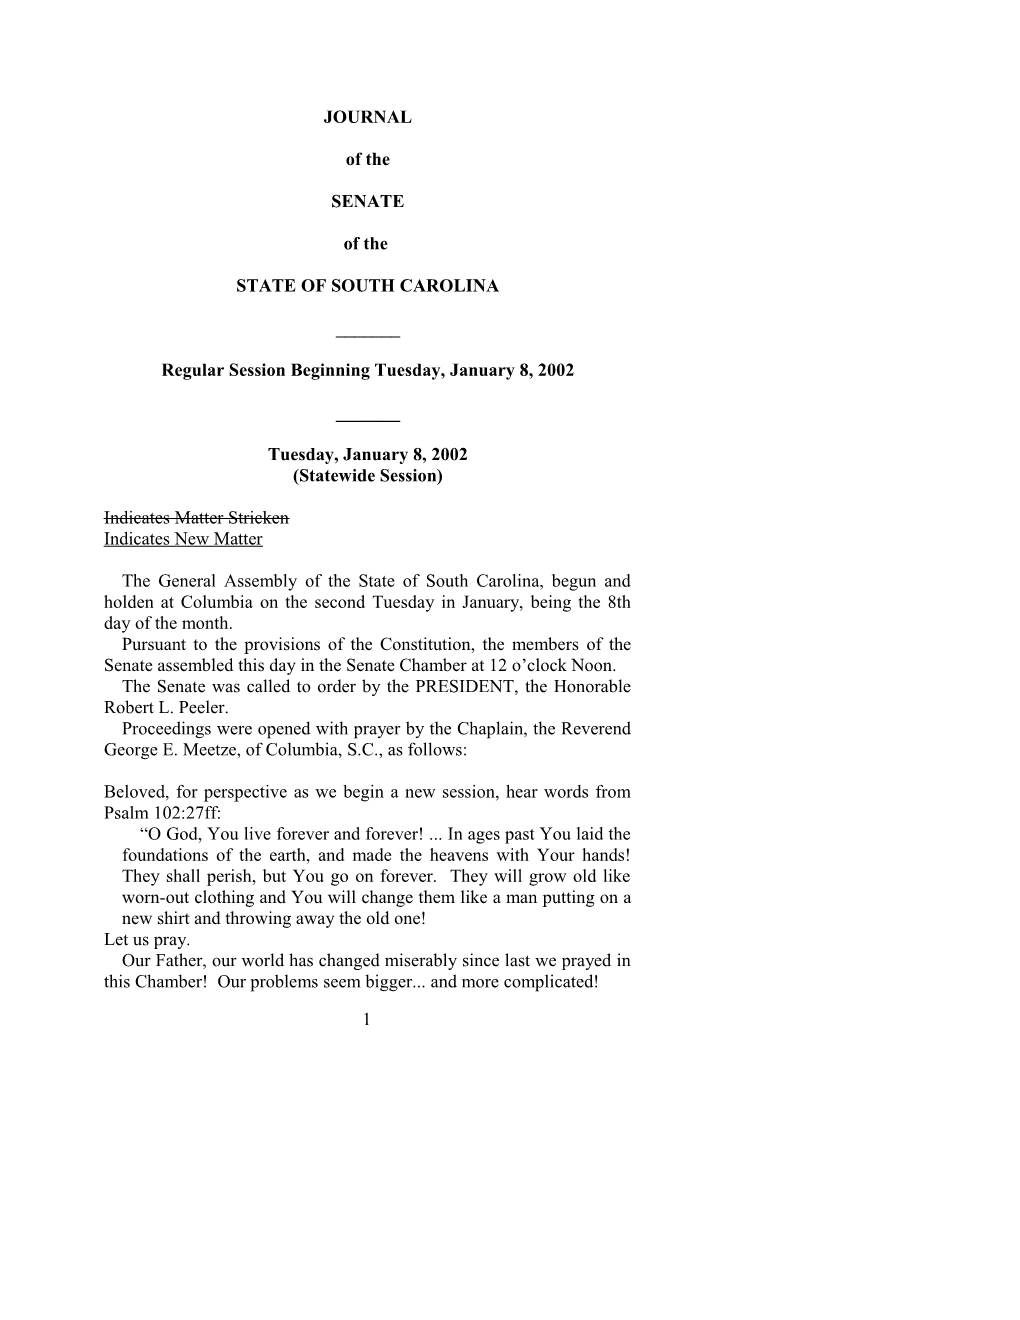 Senate Journal for Jan. 8, 2002 - South Carolina Legislature Online